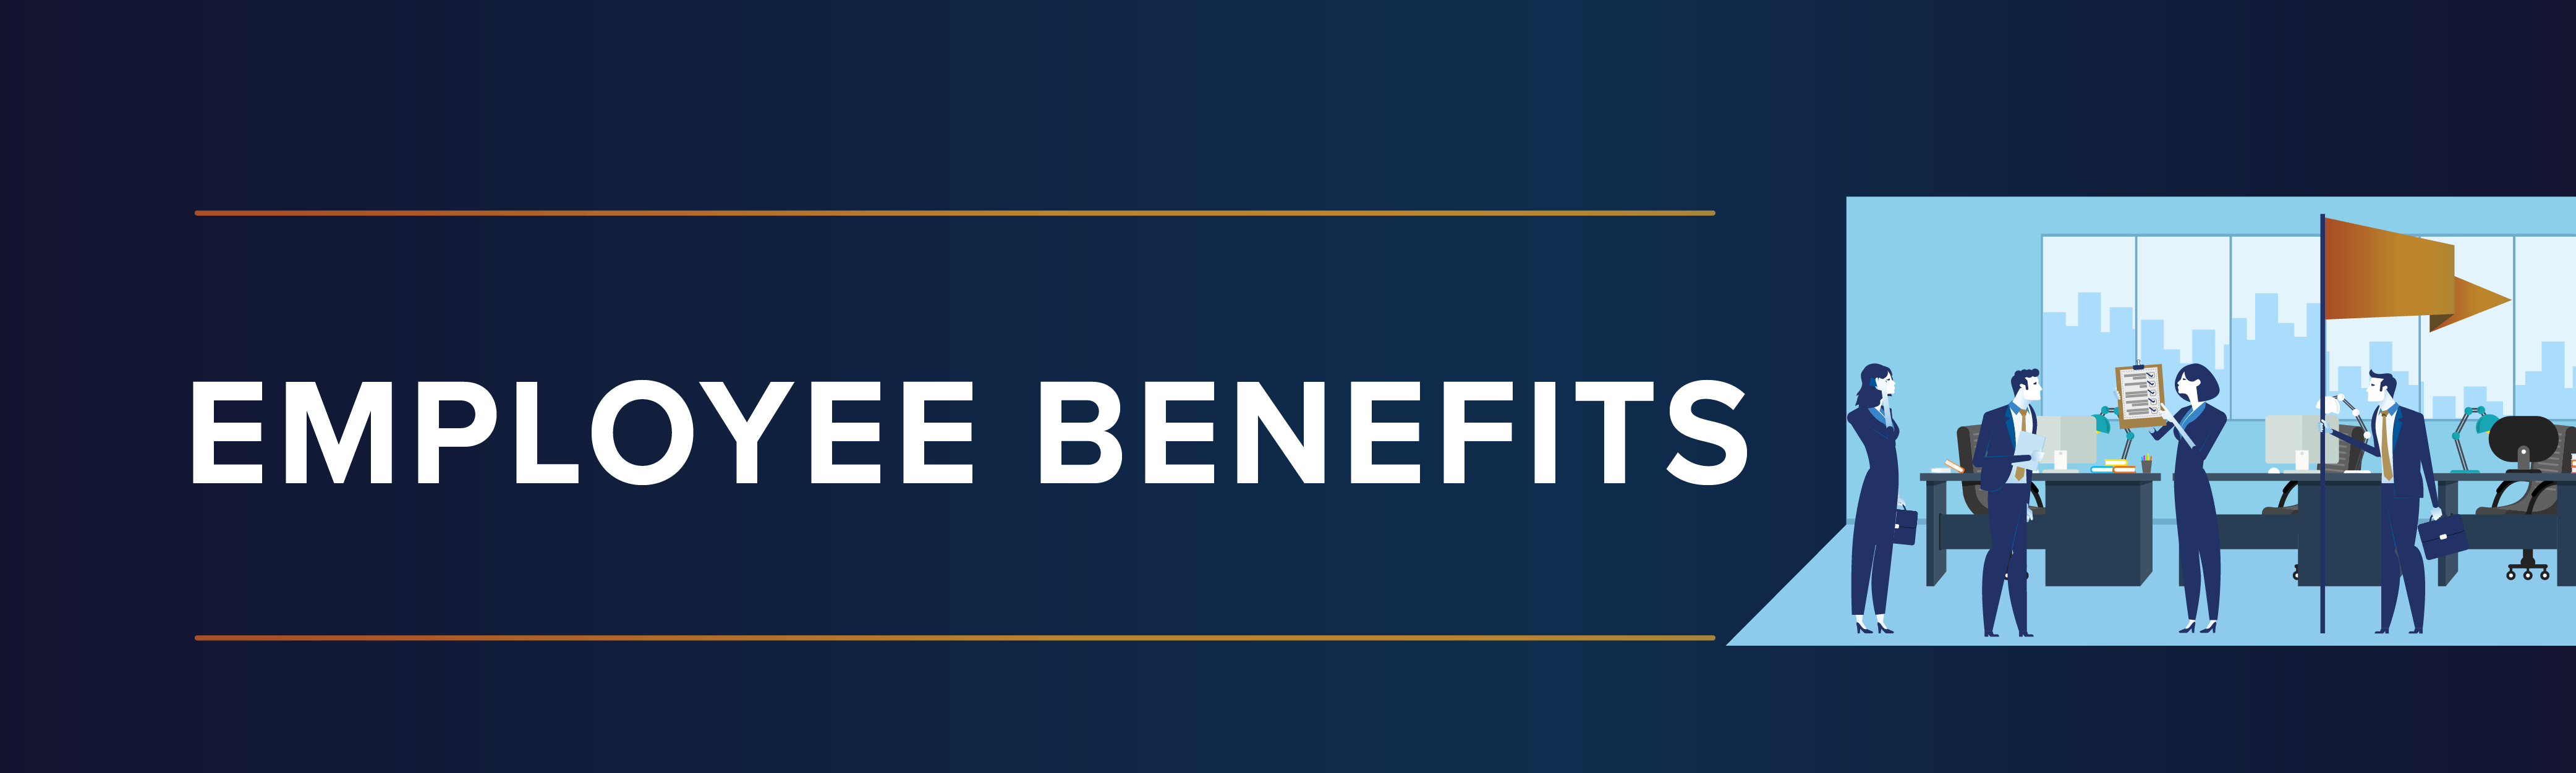 Employee Benefits MAGA logo.png